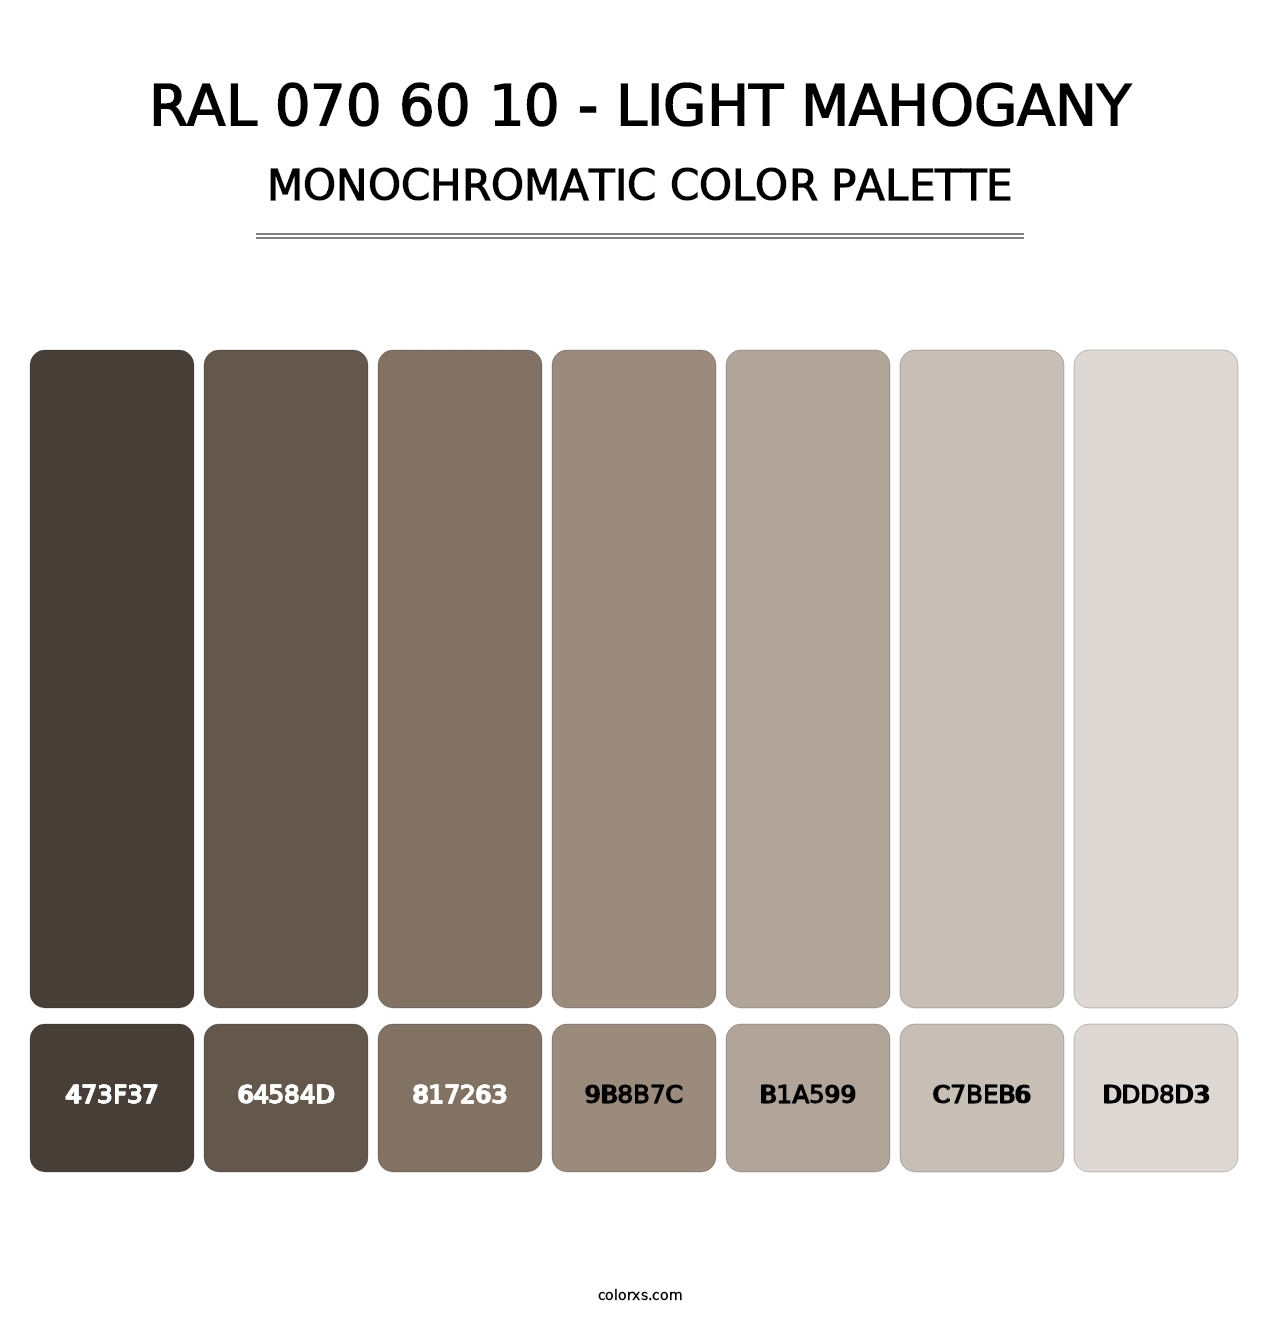 RAL 070 60 10 - Light Mahogany - Monochromatic Color Palette